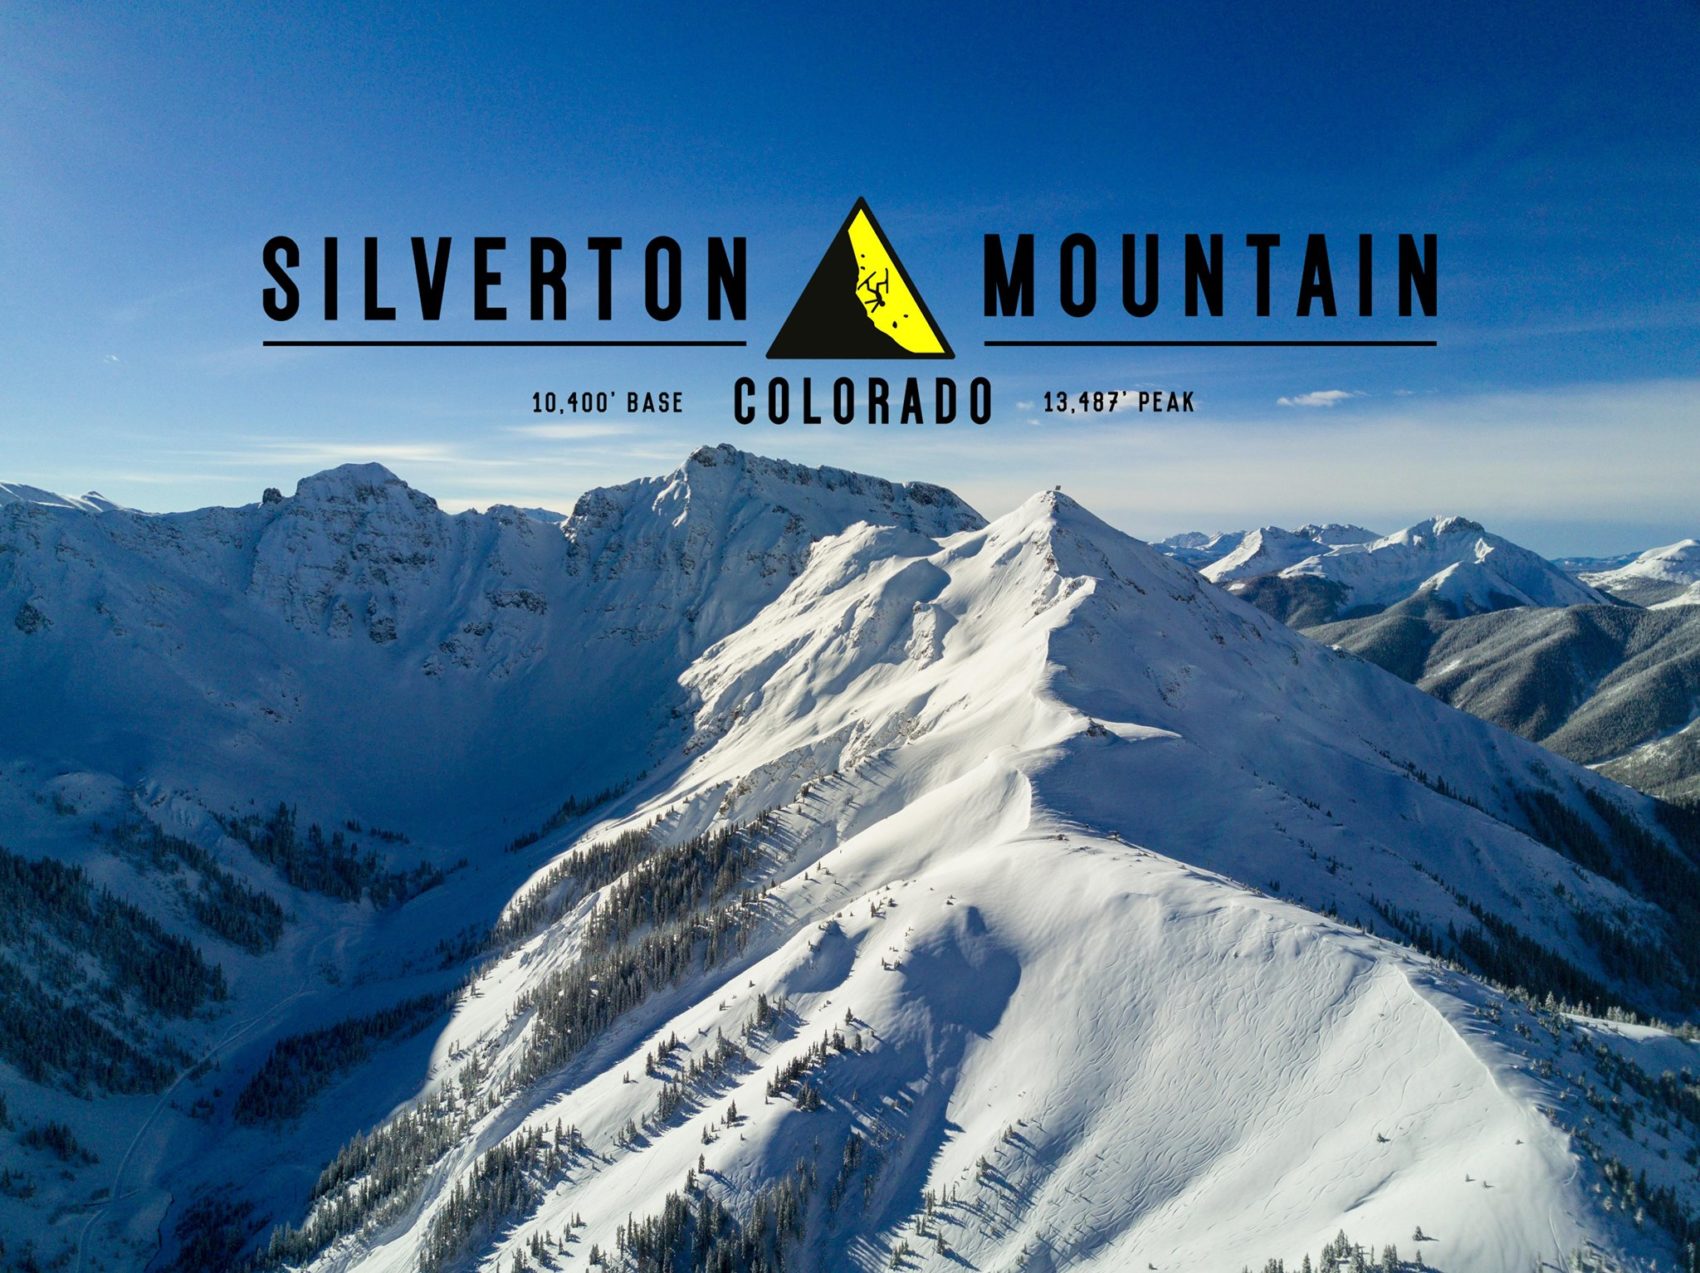 Silverton mountain, highest peak, silverton highest elevation, Silverton Mountain ski area, Silverton ski resort